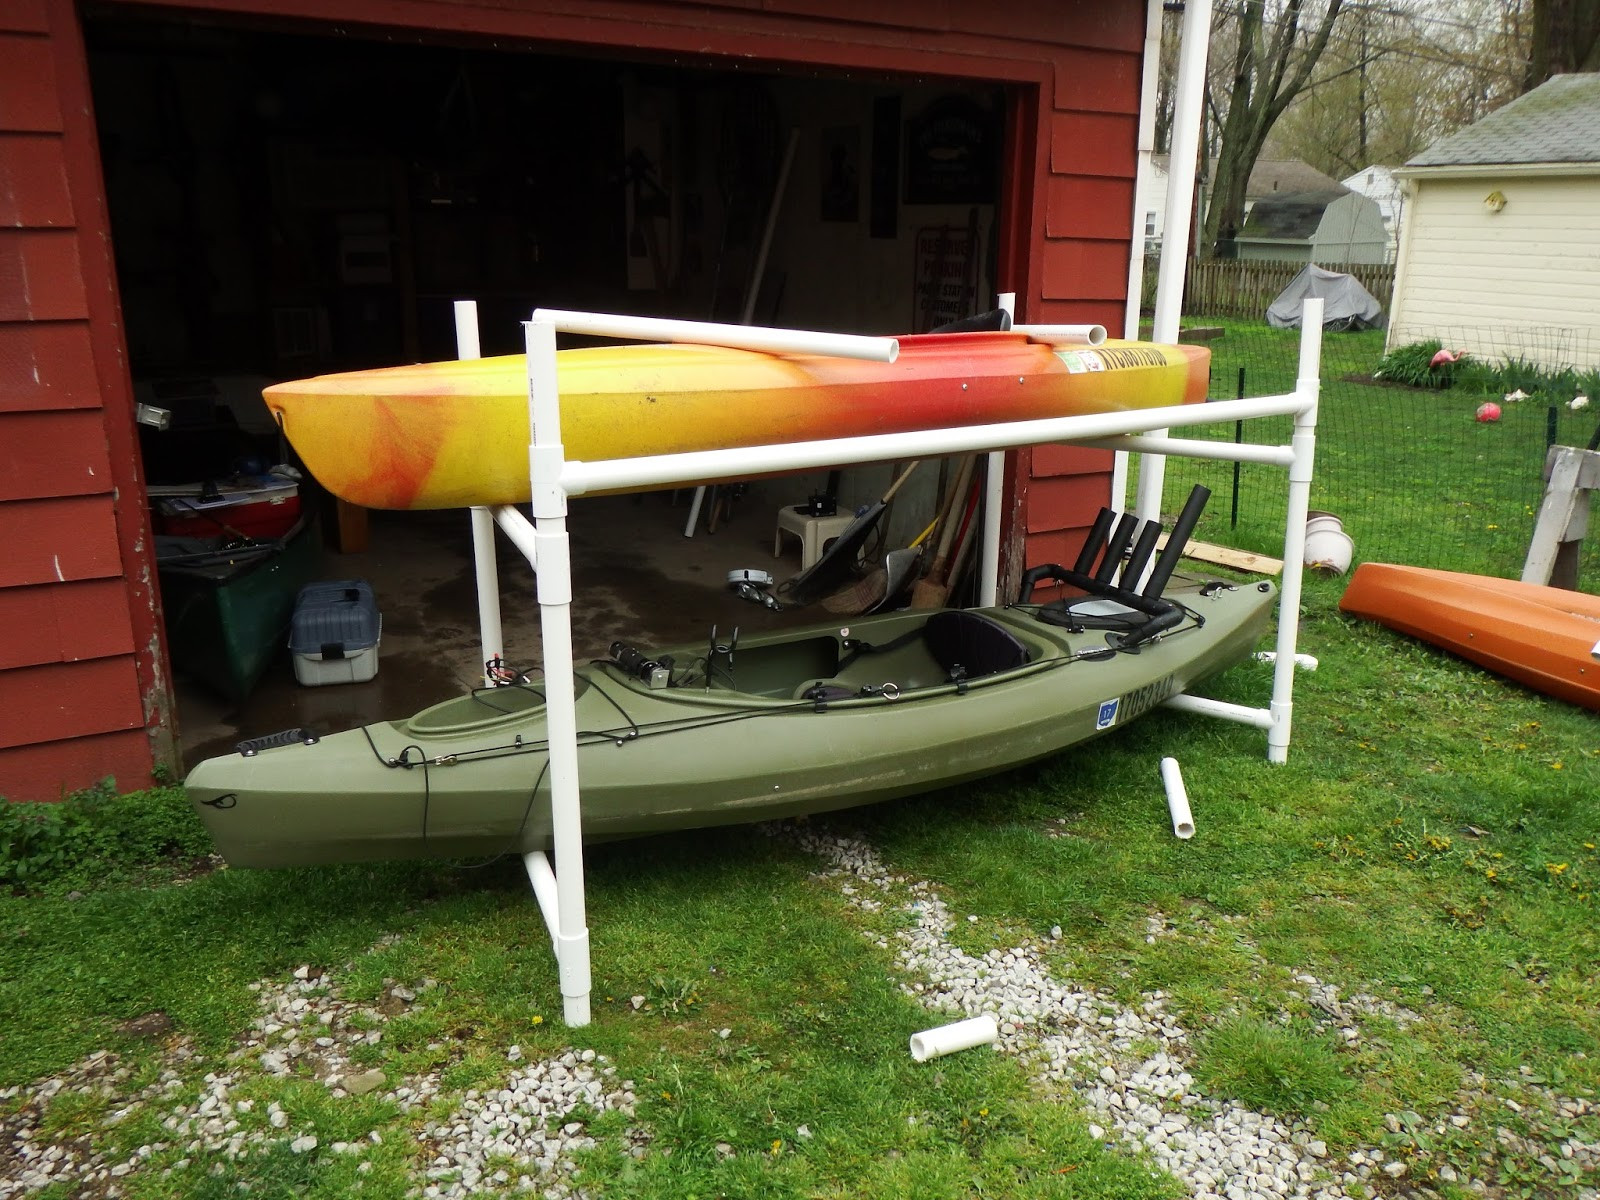 DIY Kayak Rack Pvc
 The Northern Spike DIY Kayak Storage Rack